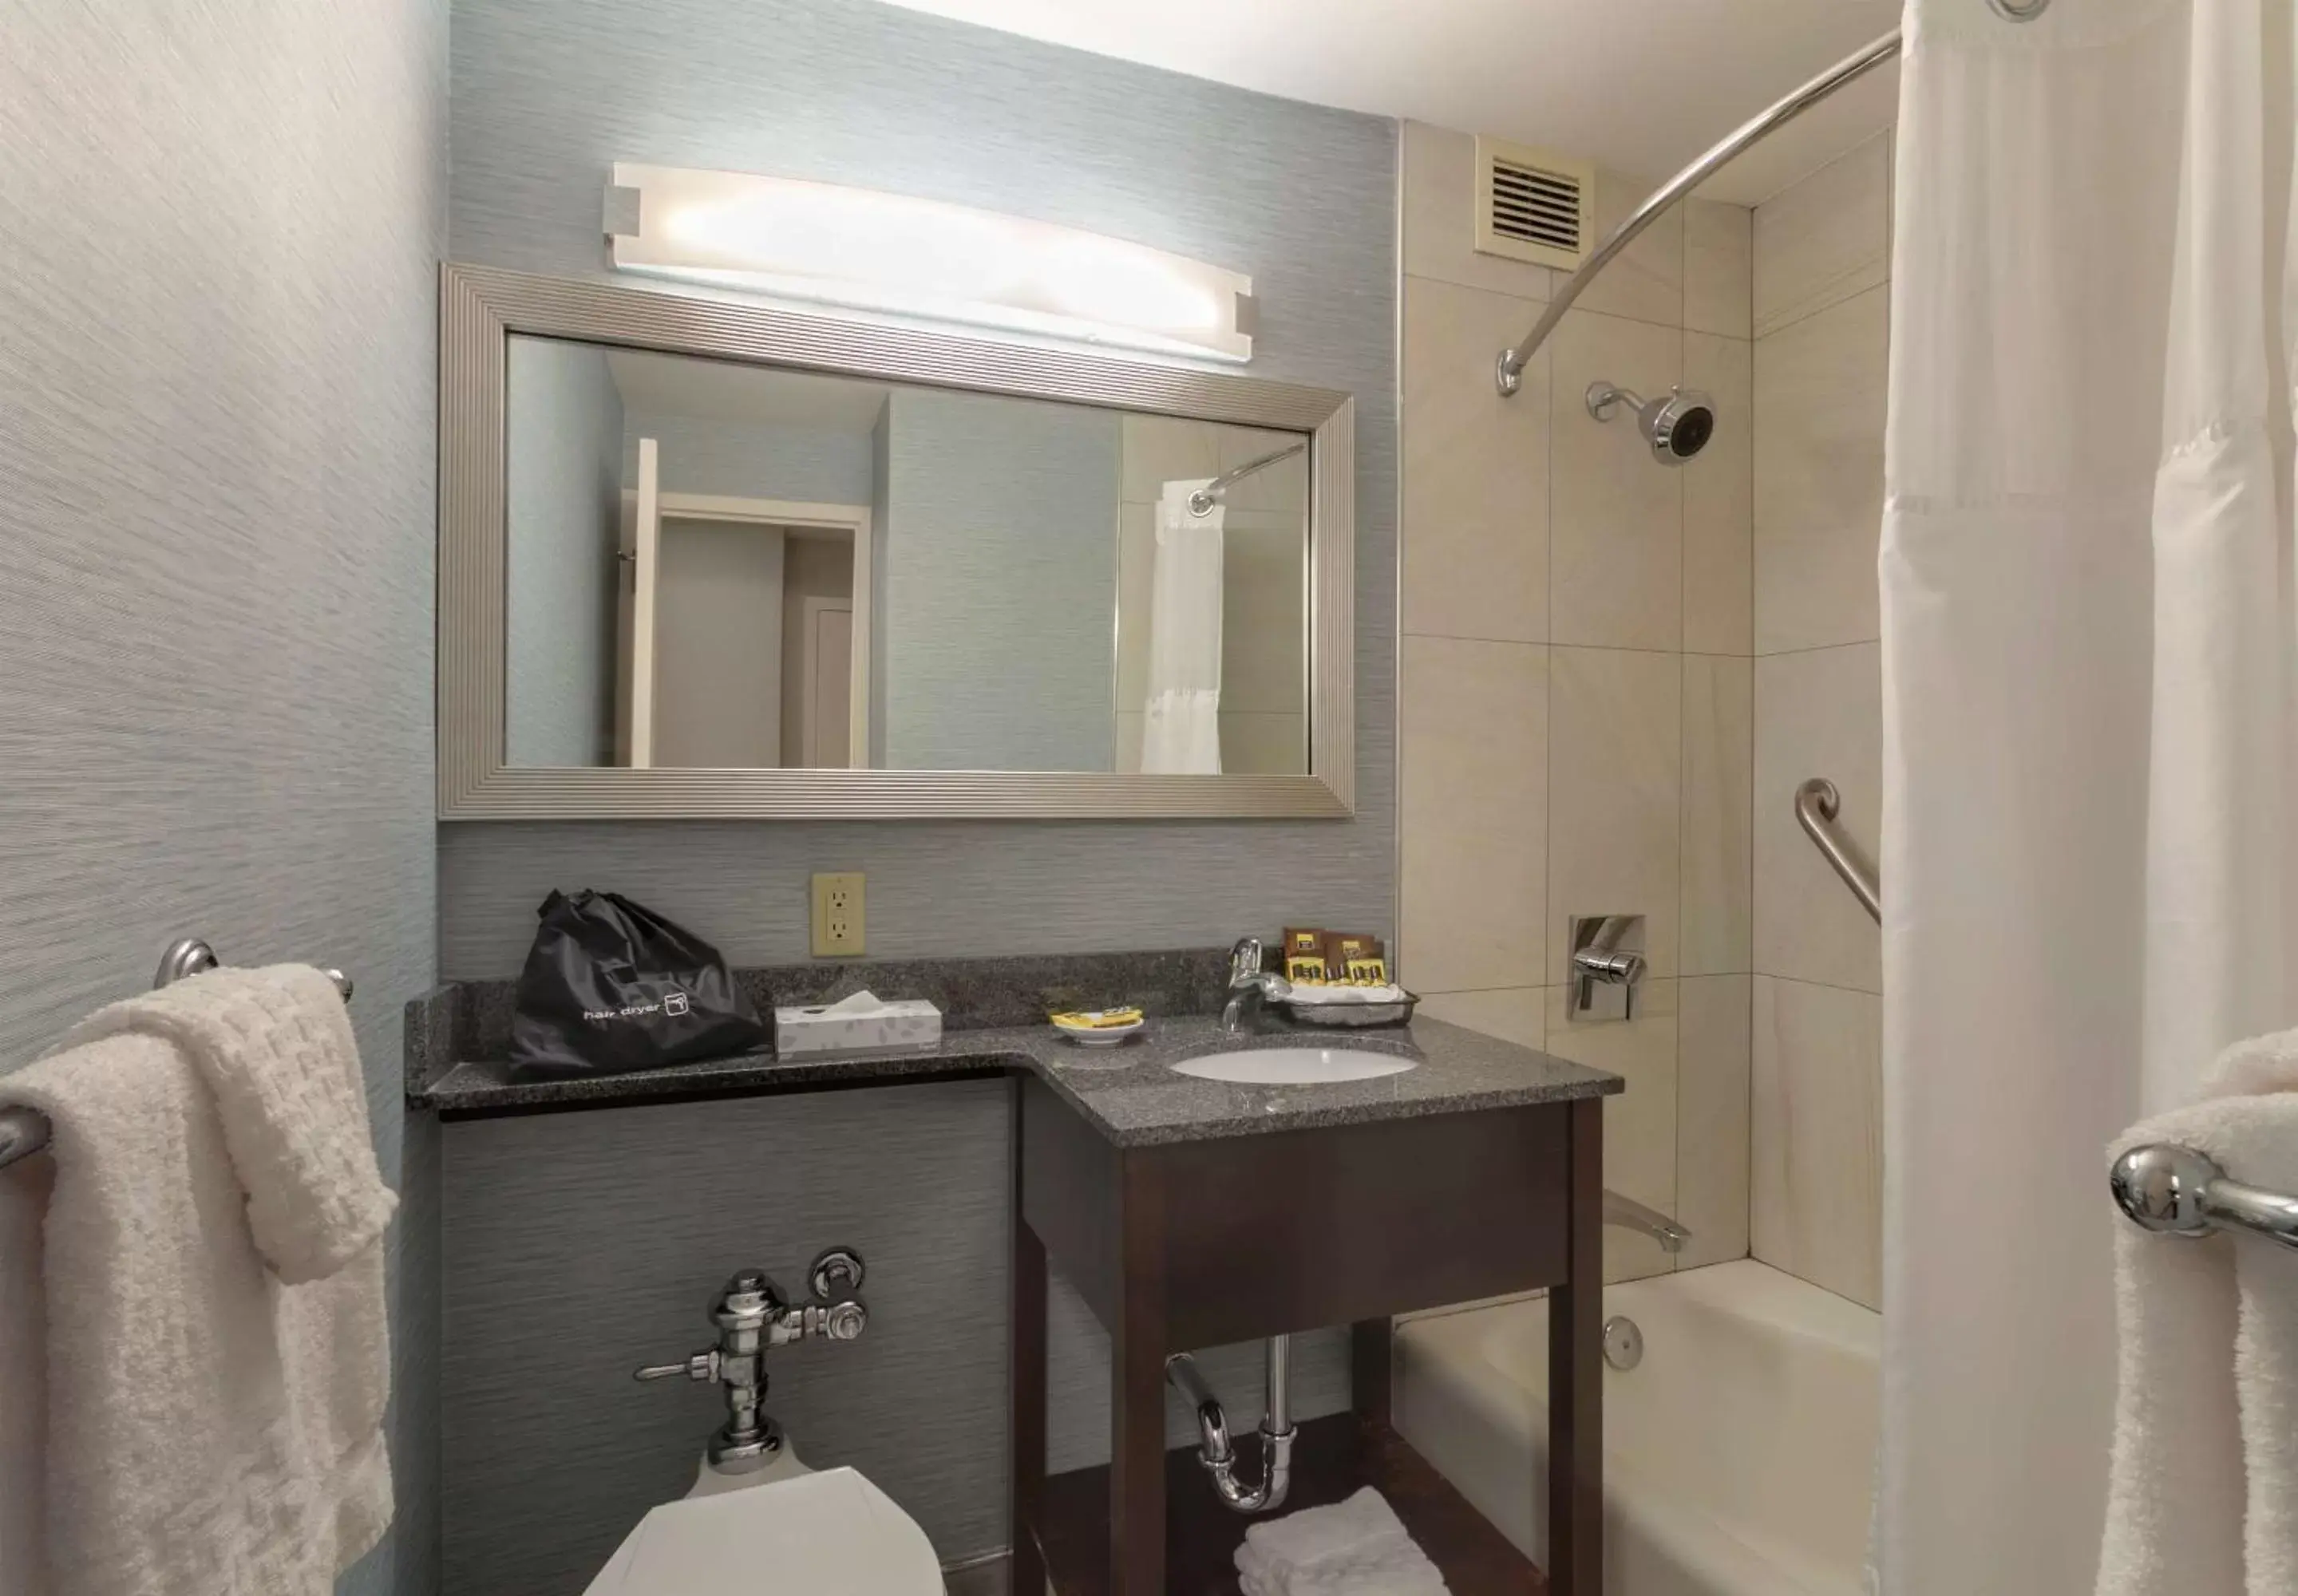 Photo of the whole room, Bathroom in Robert Treat Hotel